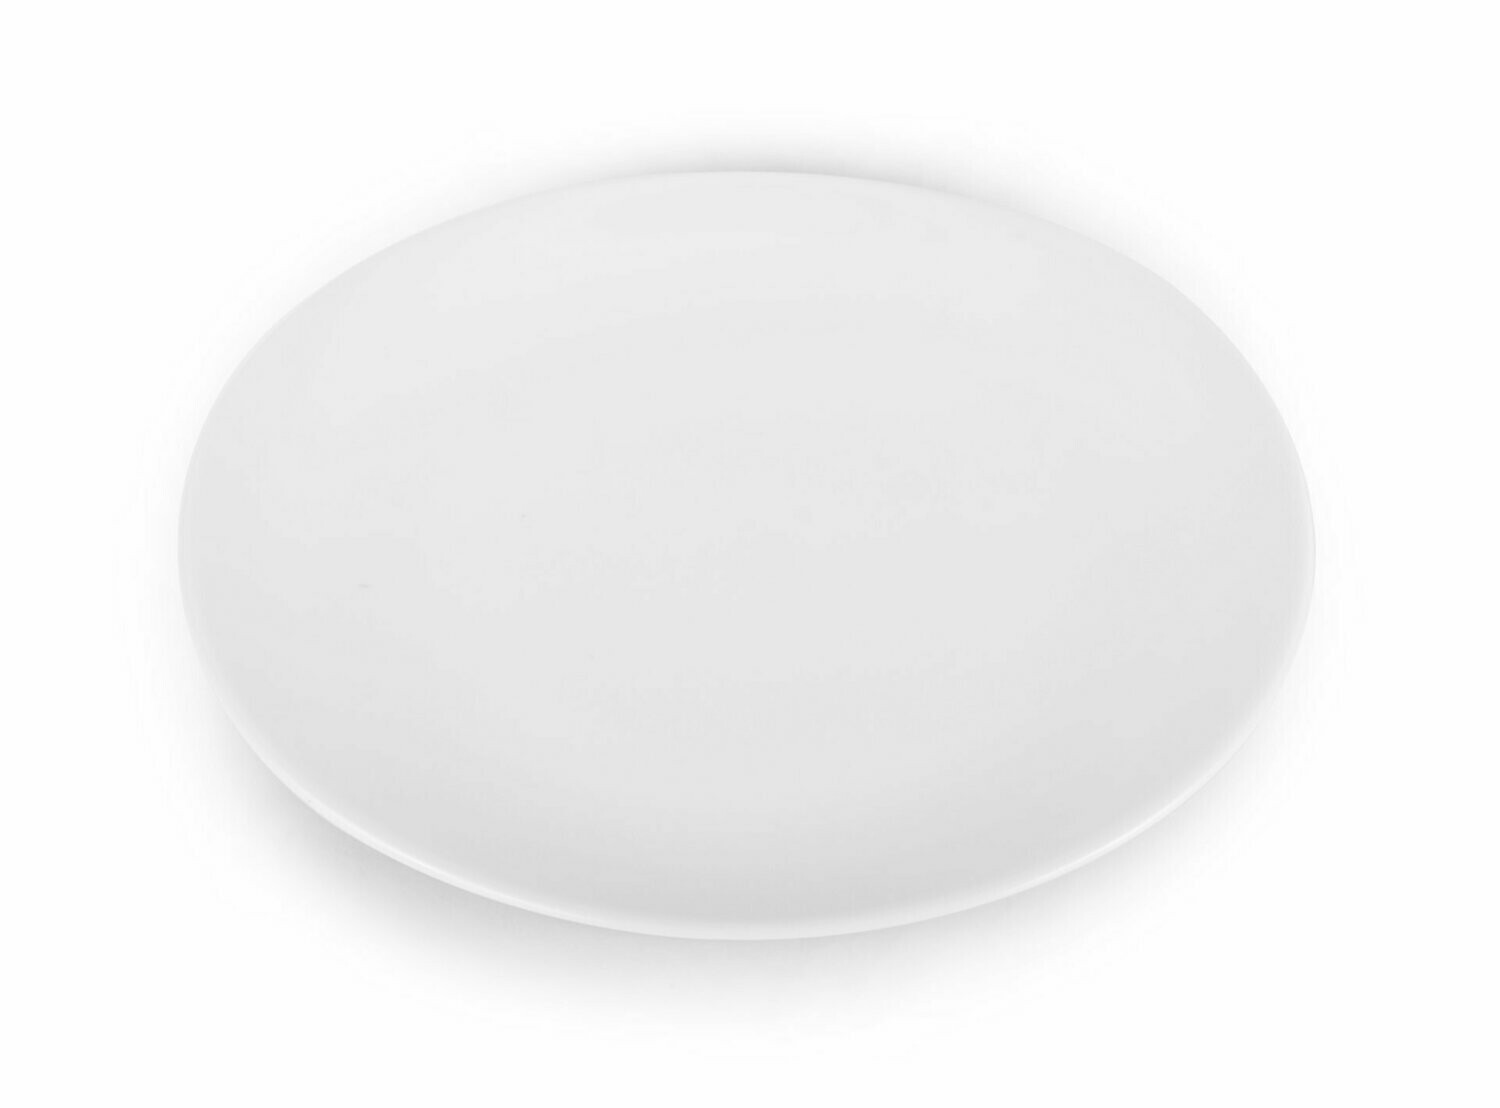 Platter - Large servings